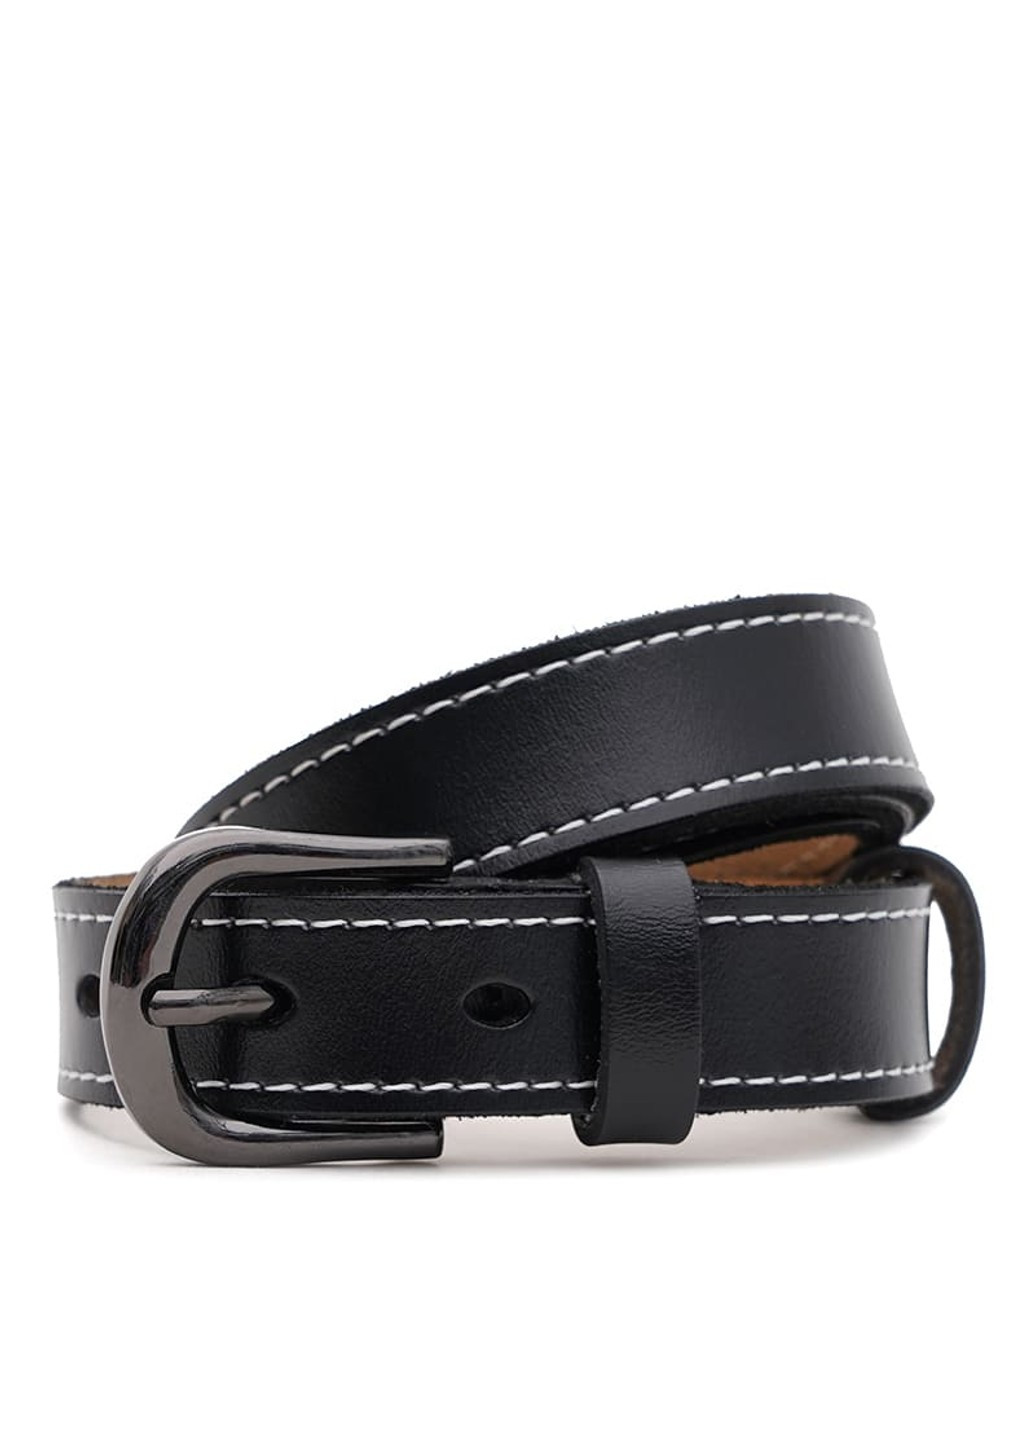 Женский кожаный ремень CV1ZK-007bl-black Borsa Leather (266143873)